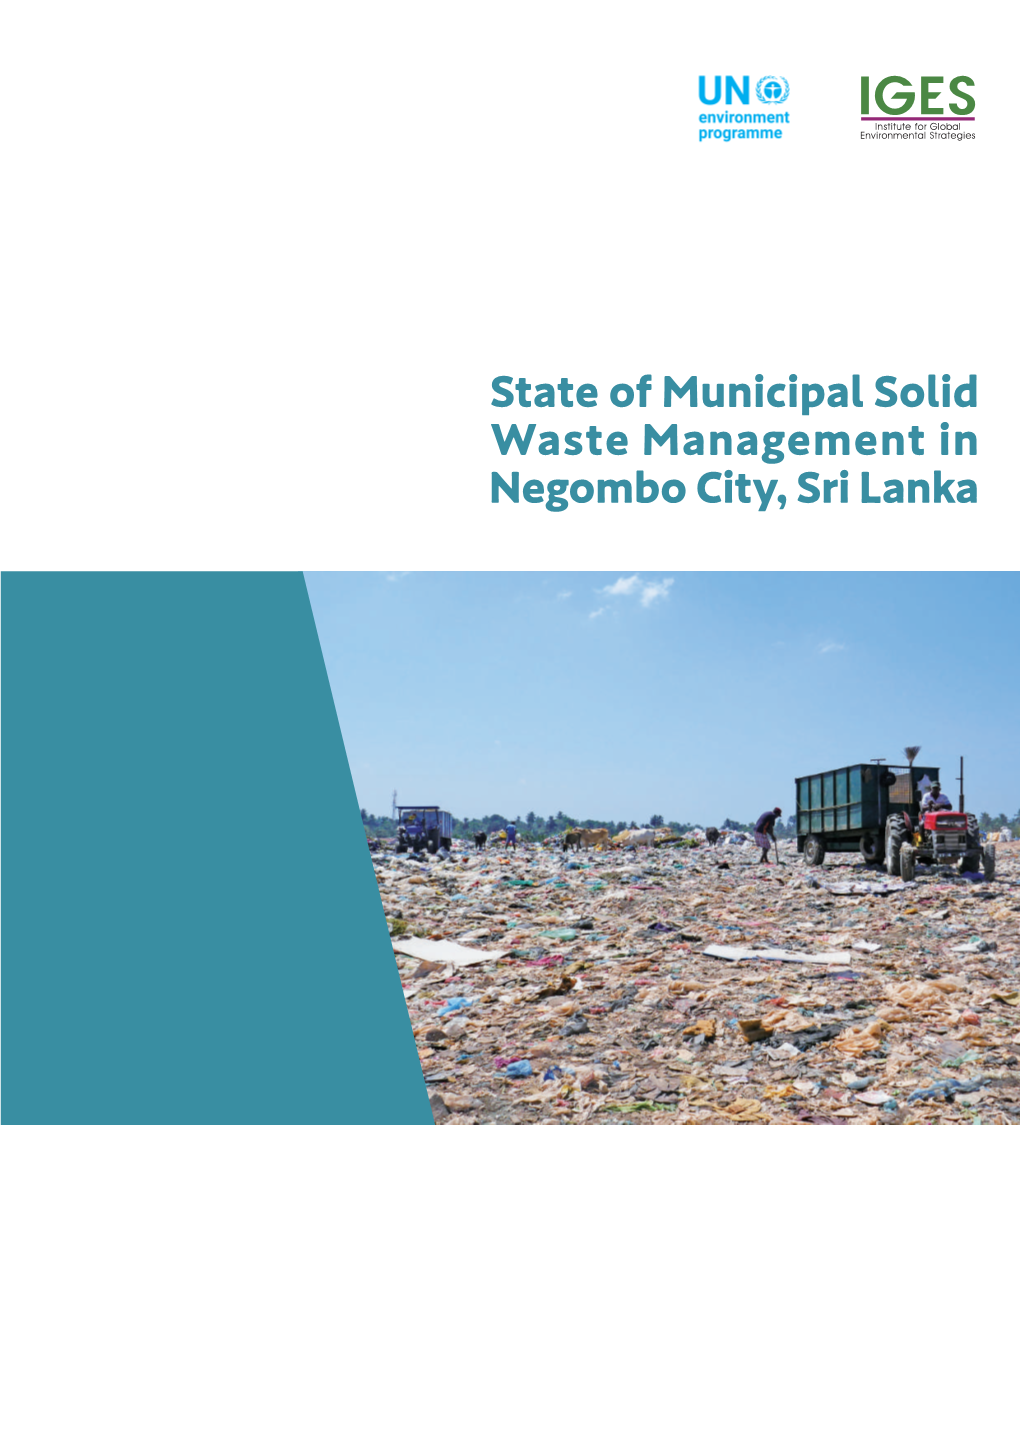 State of Municipal Solid Waste Management in Negombo City, Sri Lanka